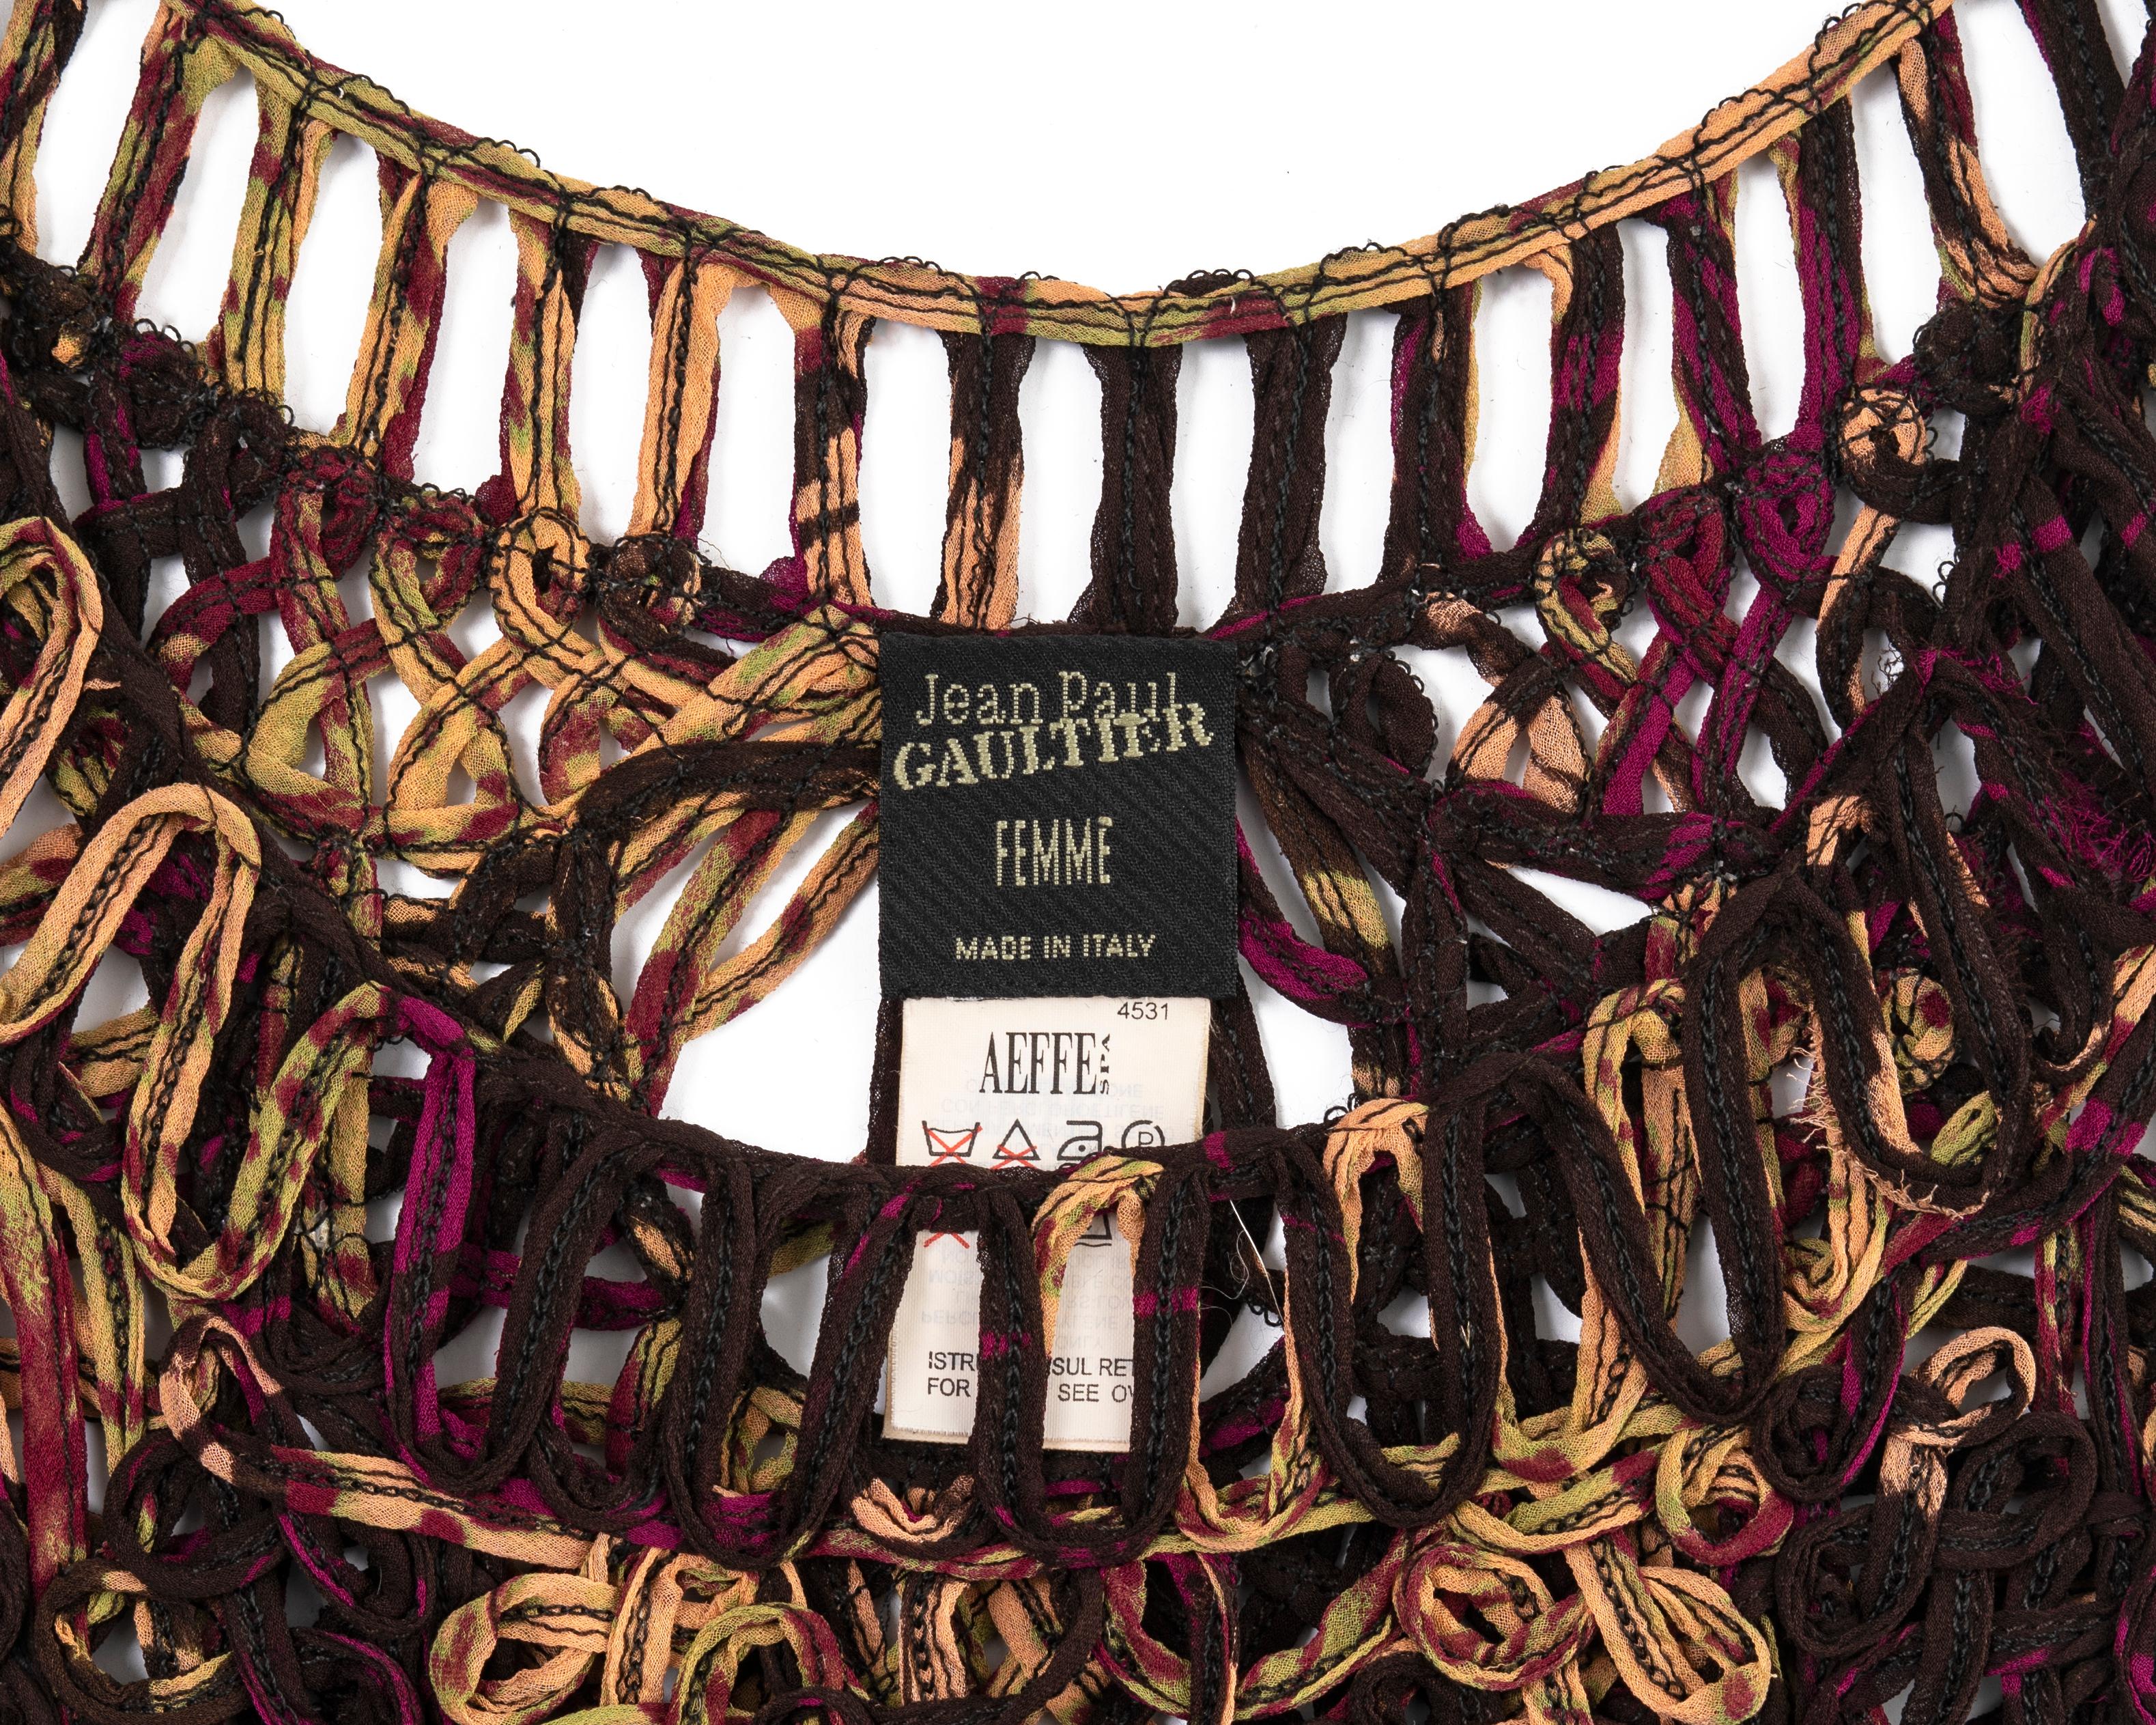 Jean Paul Gaultier fringed silk macramé dress, ss 2000 For Sale 3